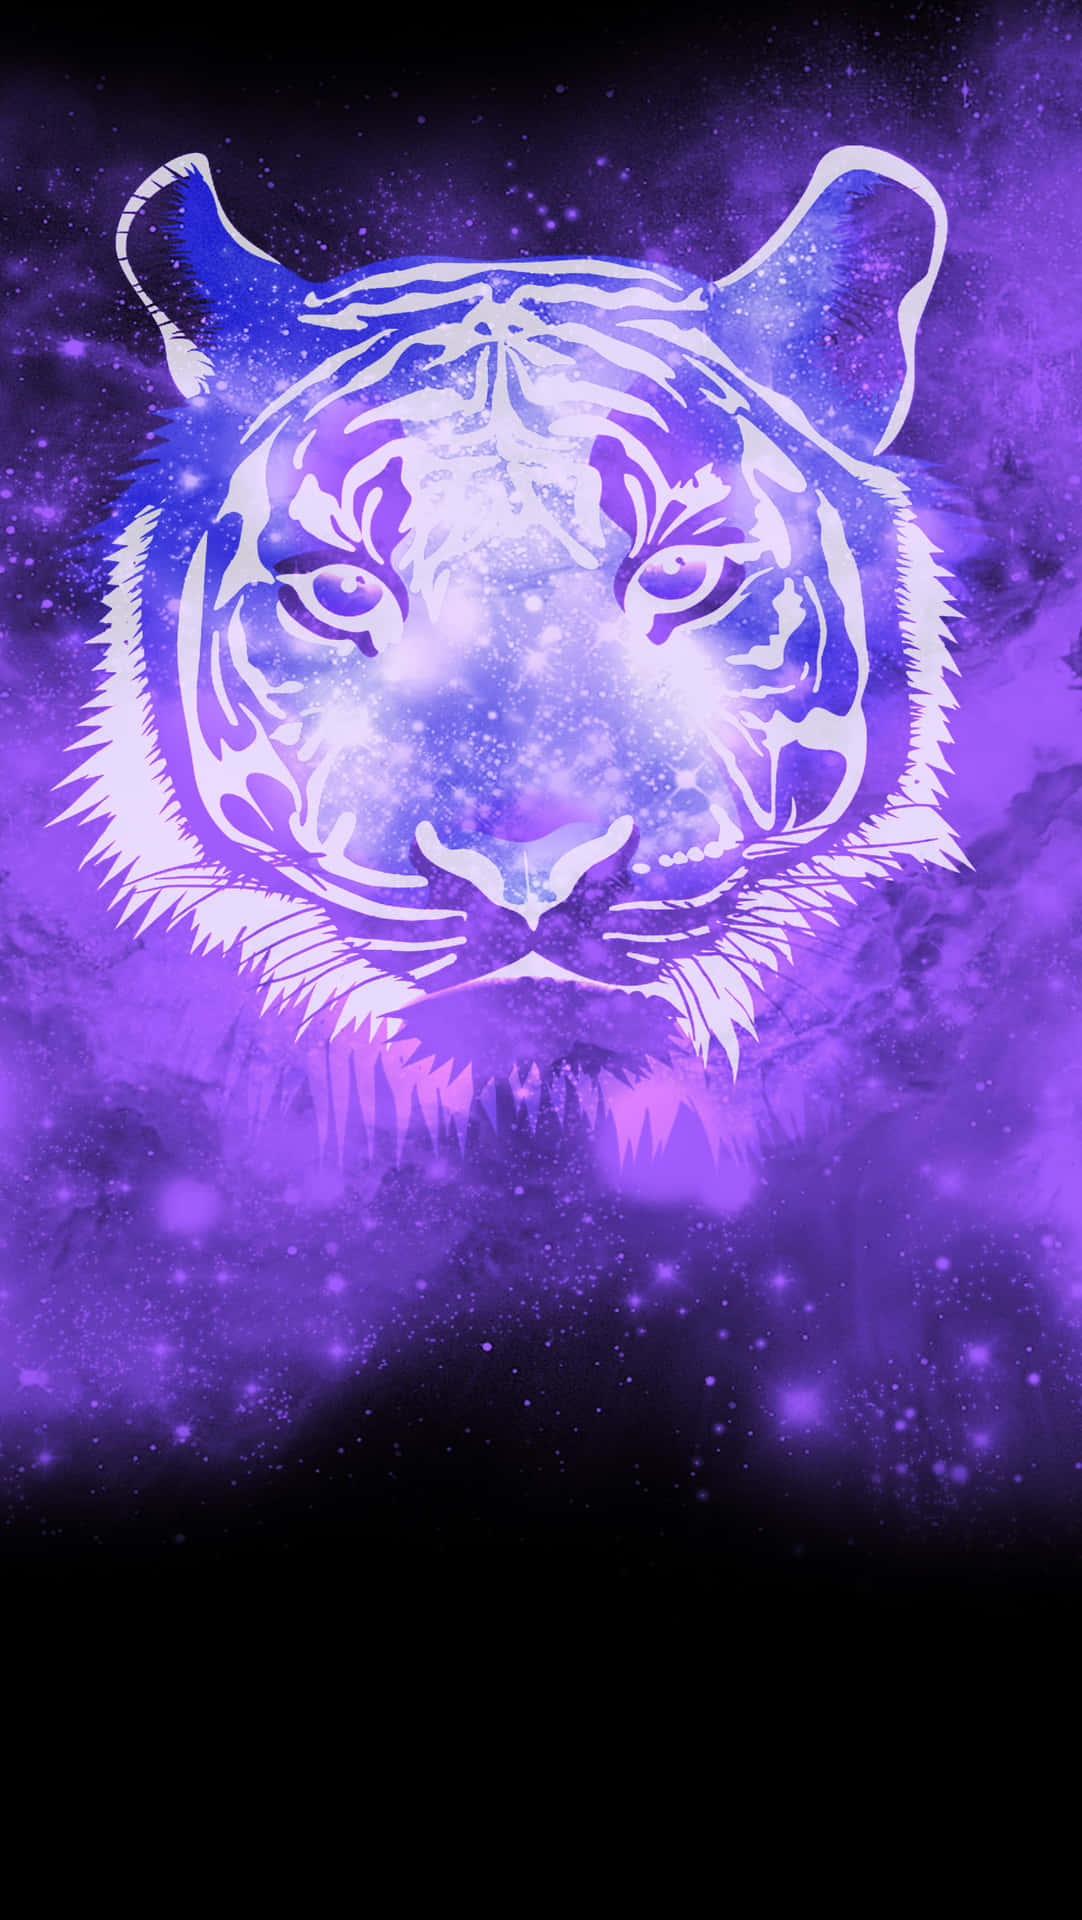 Striking Beauty of the Tiger Galaxy Universe Wallpaper